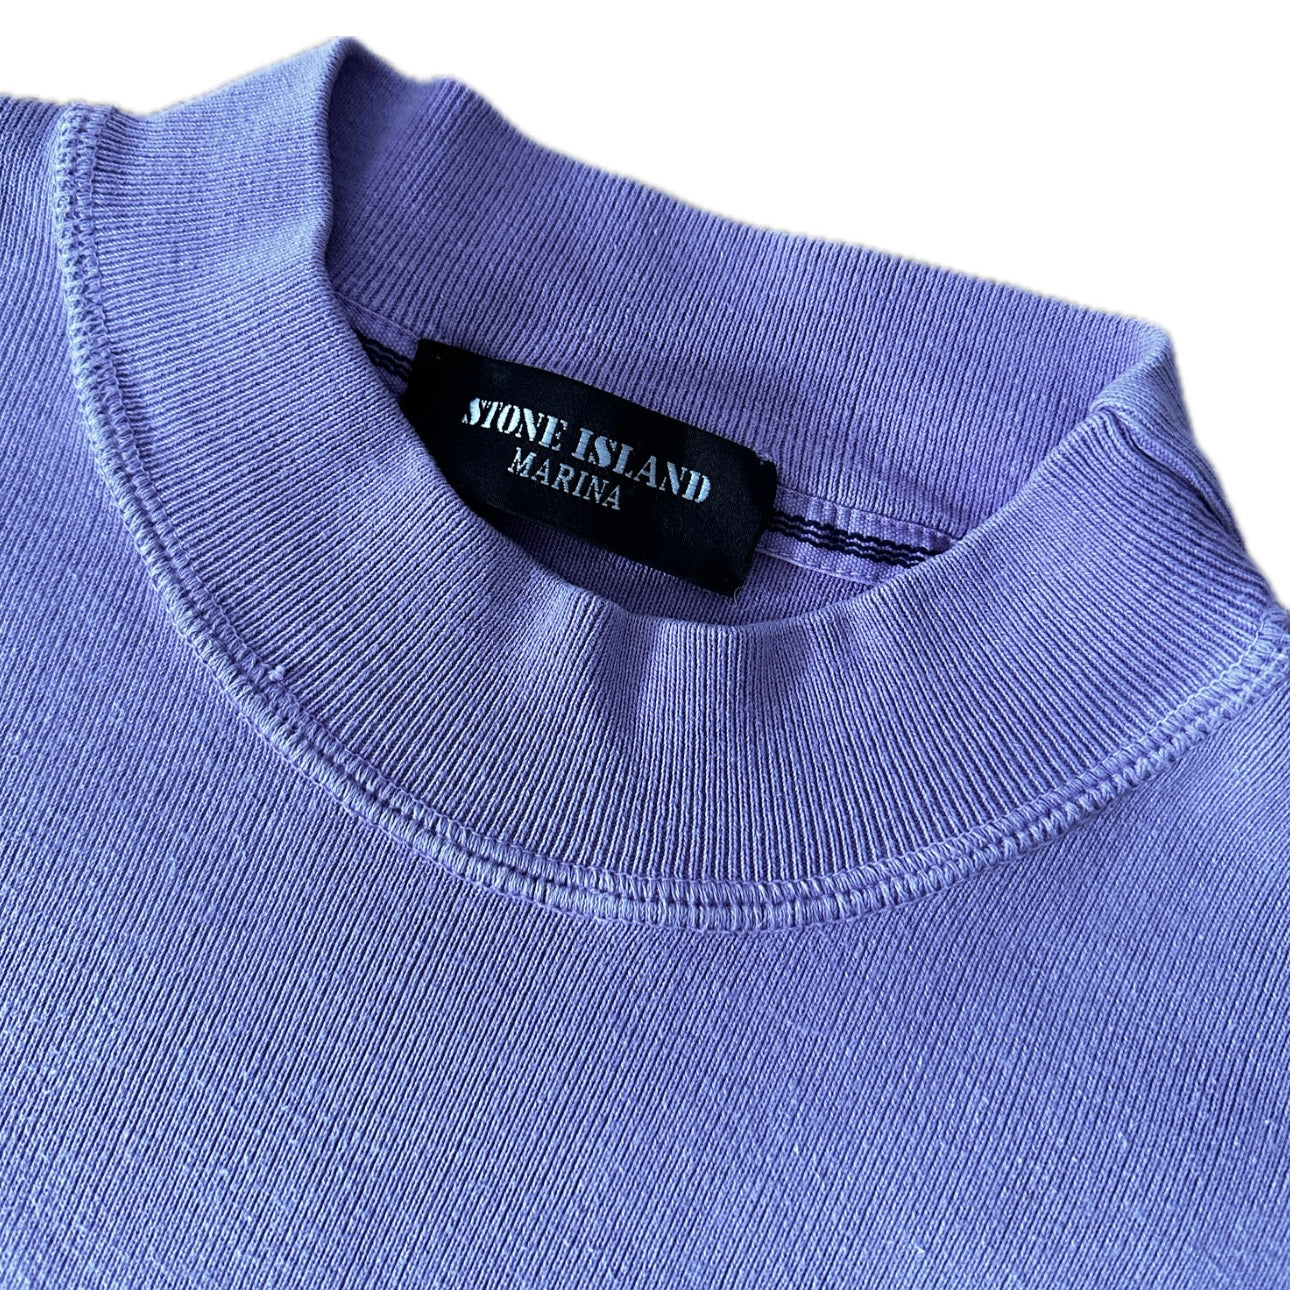 Stone Island Marina 1989 80s Massimo Osti Sweatshirt - Lavender - XL - Made in Italy